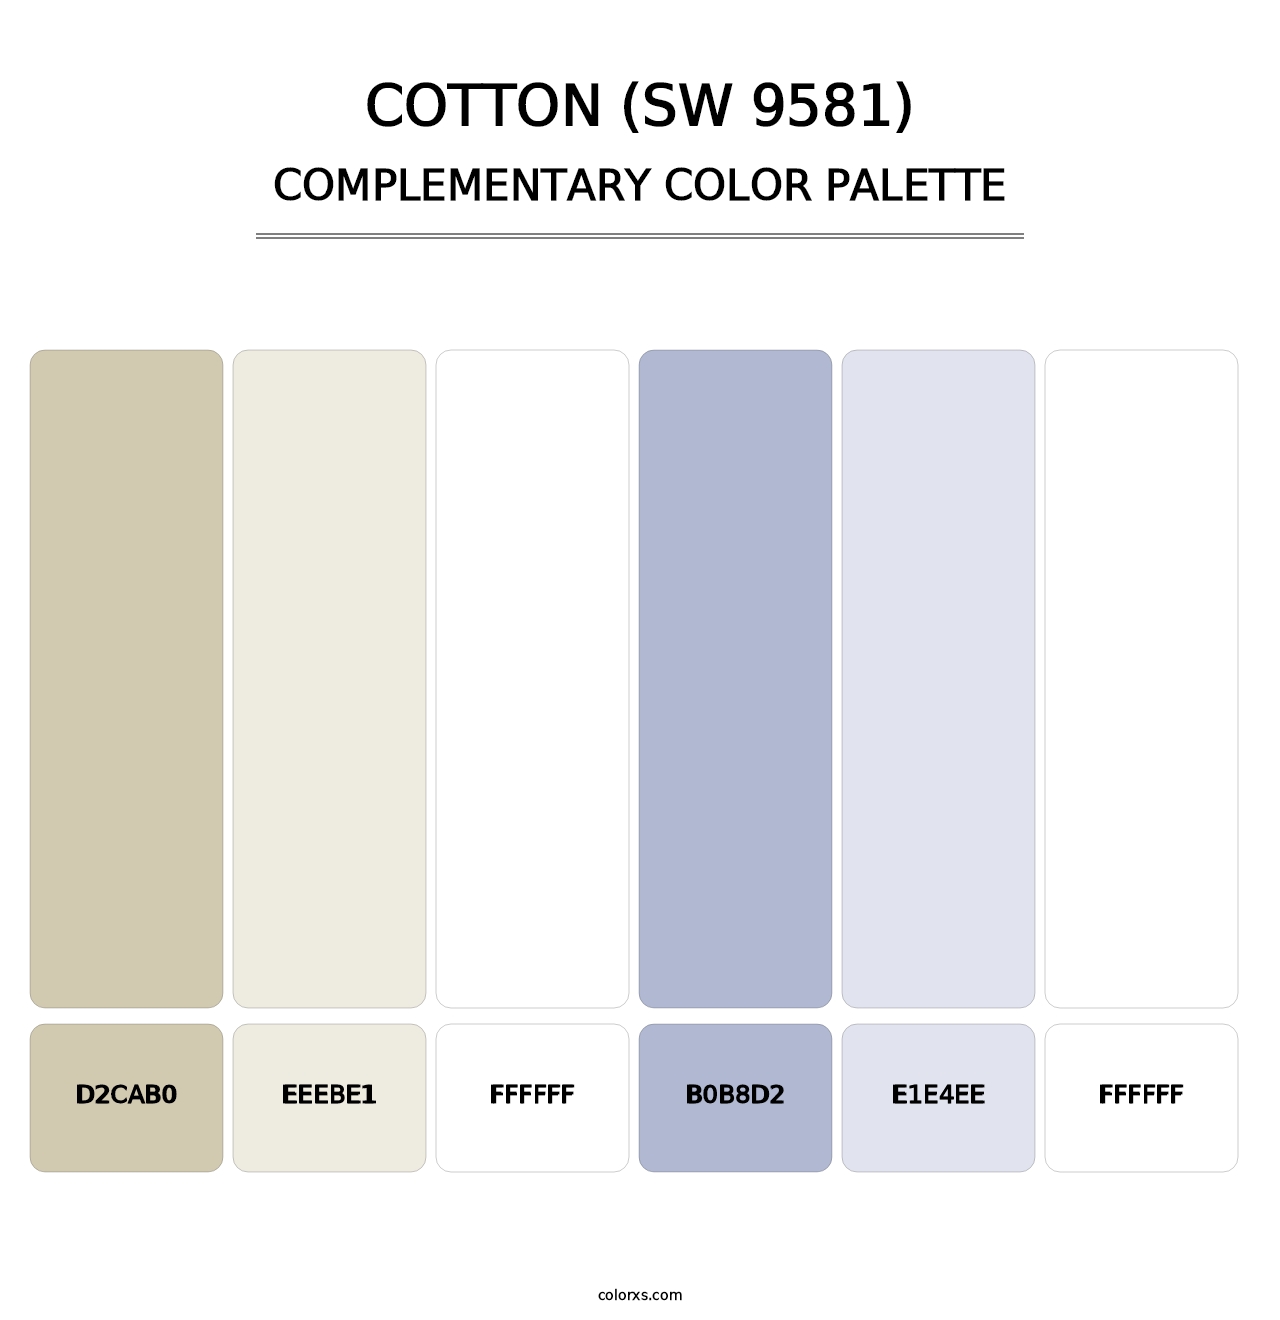 Cotton (SW 9581) - Complementary Color Palette